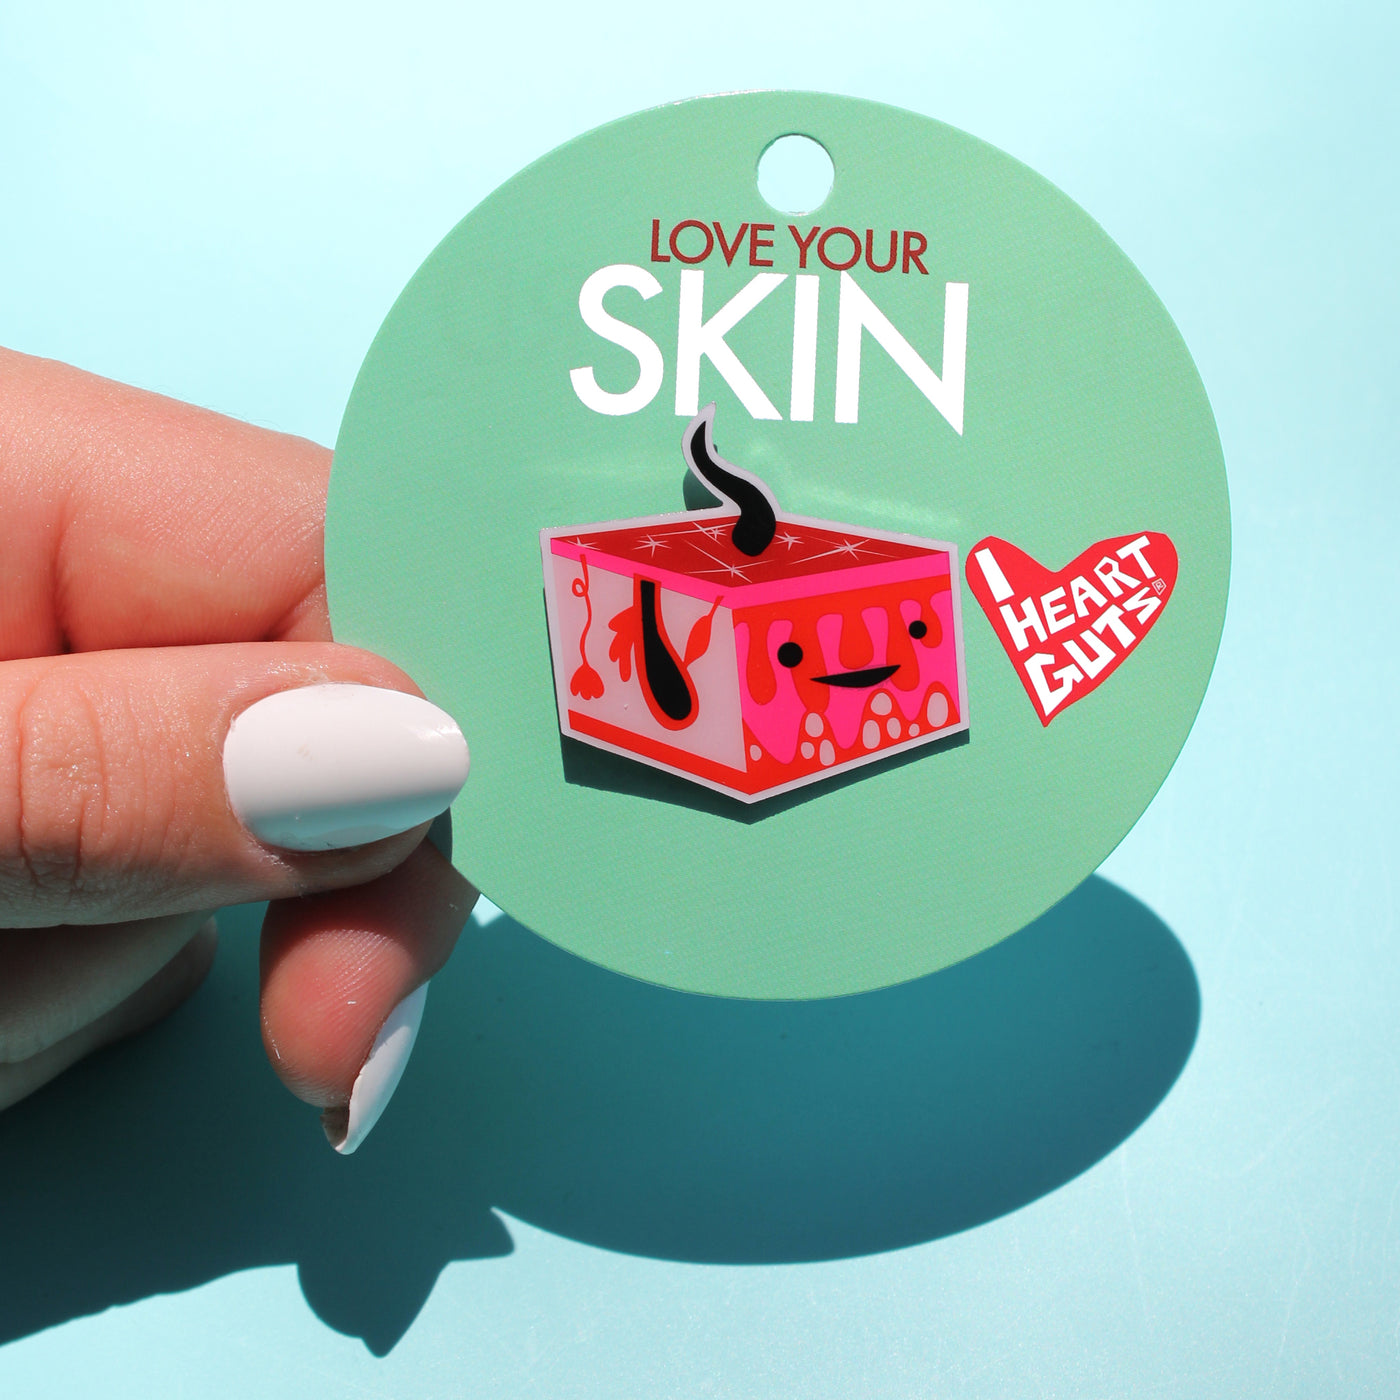 Skin Lapel Pin with More Melanin - Love Your Skin